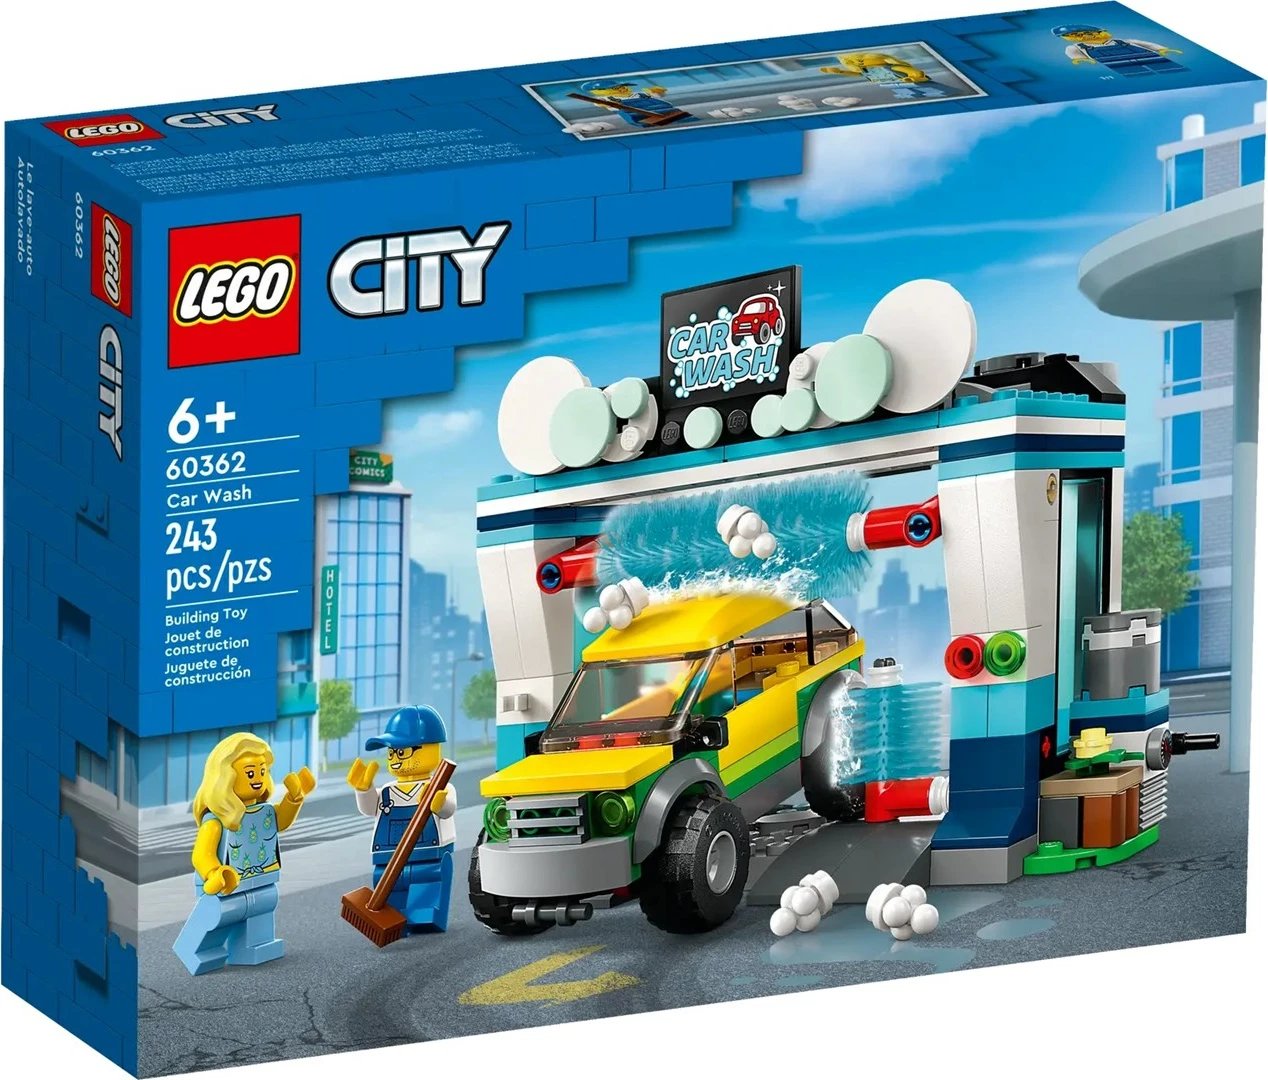 Set LEGO City 60362 Car Wash